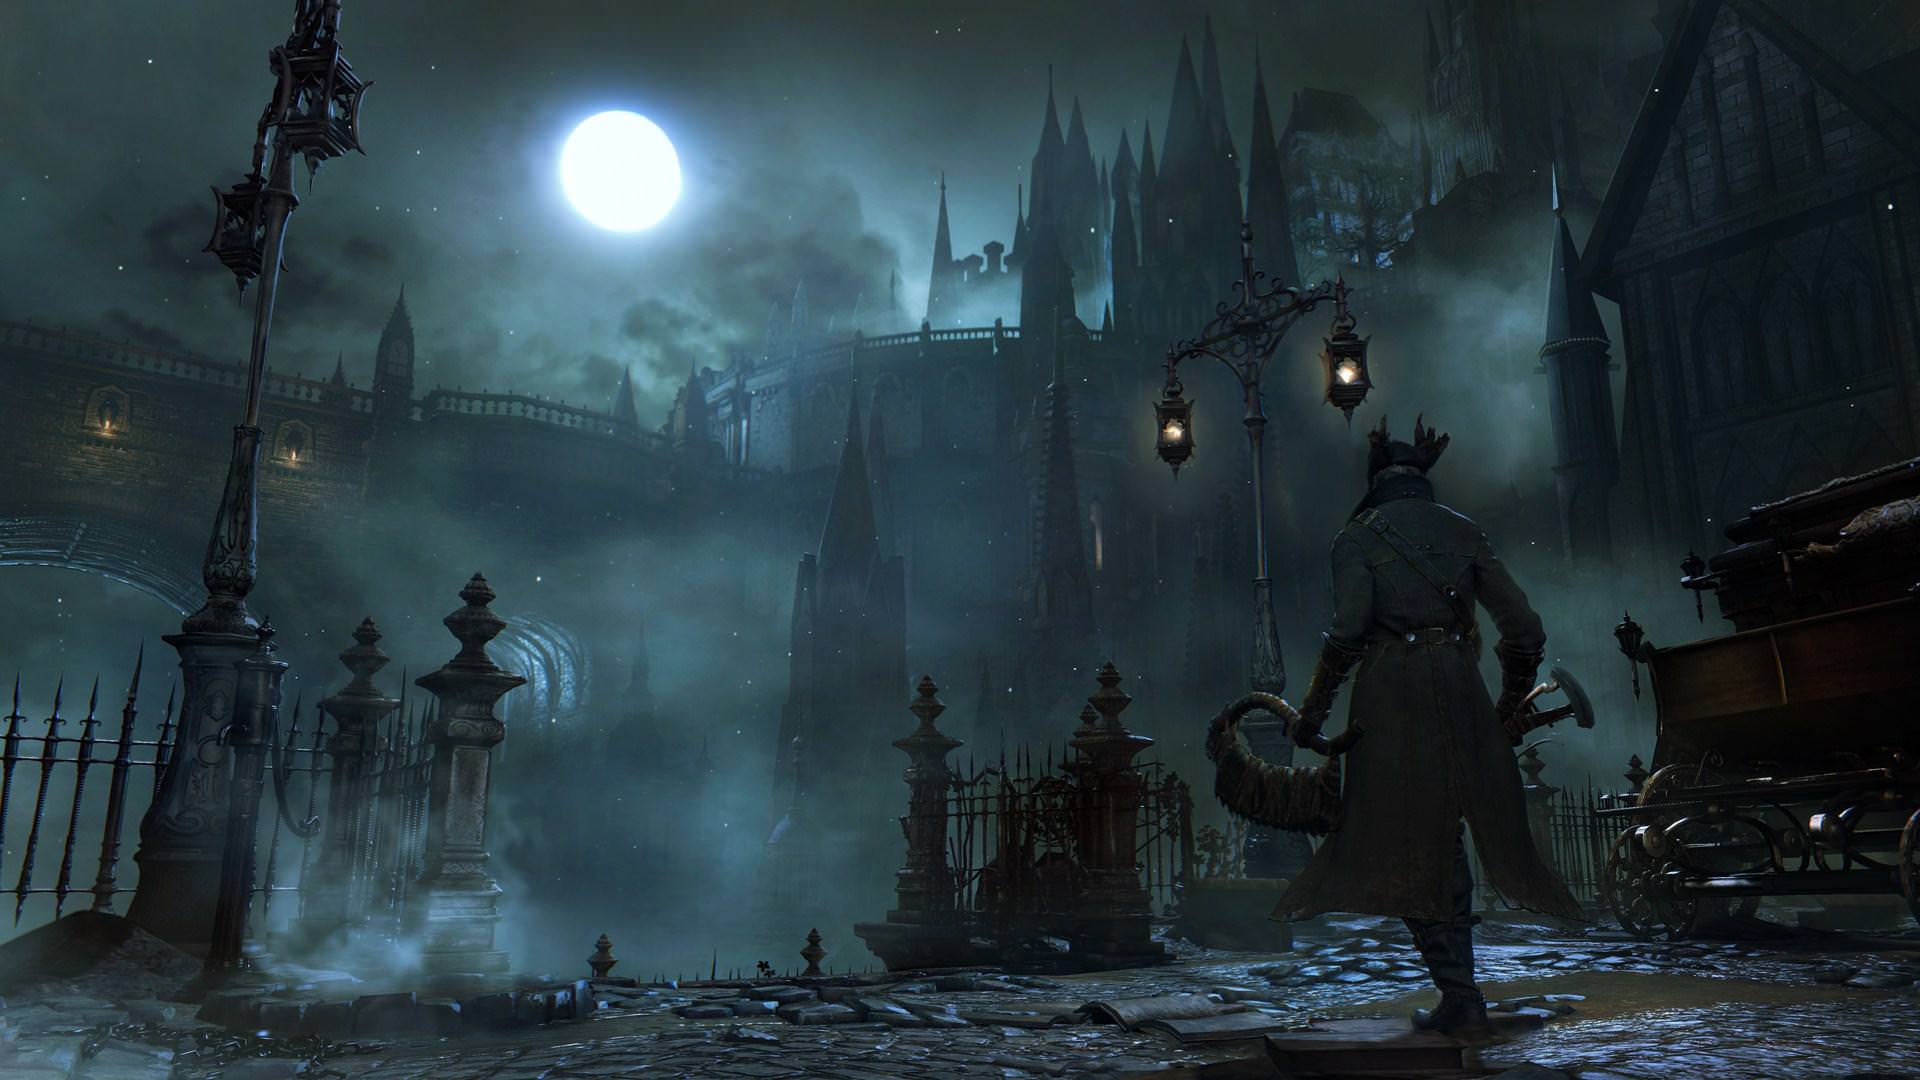 Bloodborne - righting Dark Souls 2's wrongs